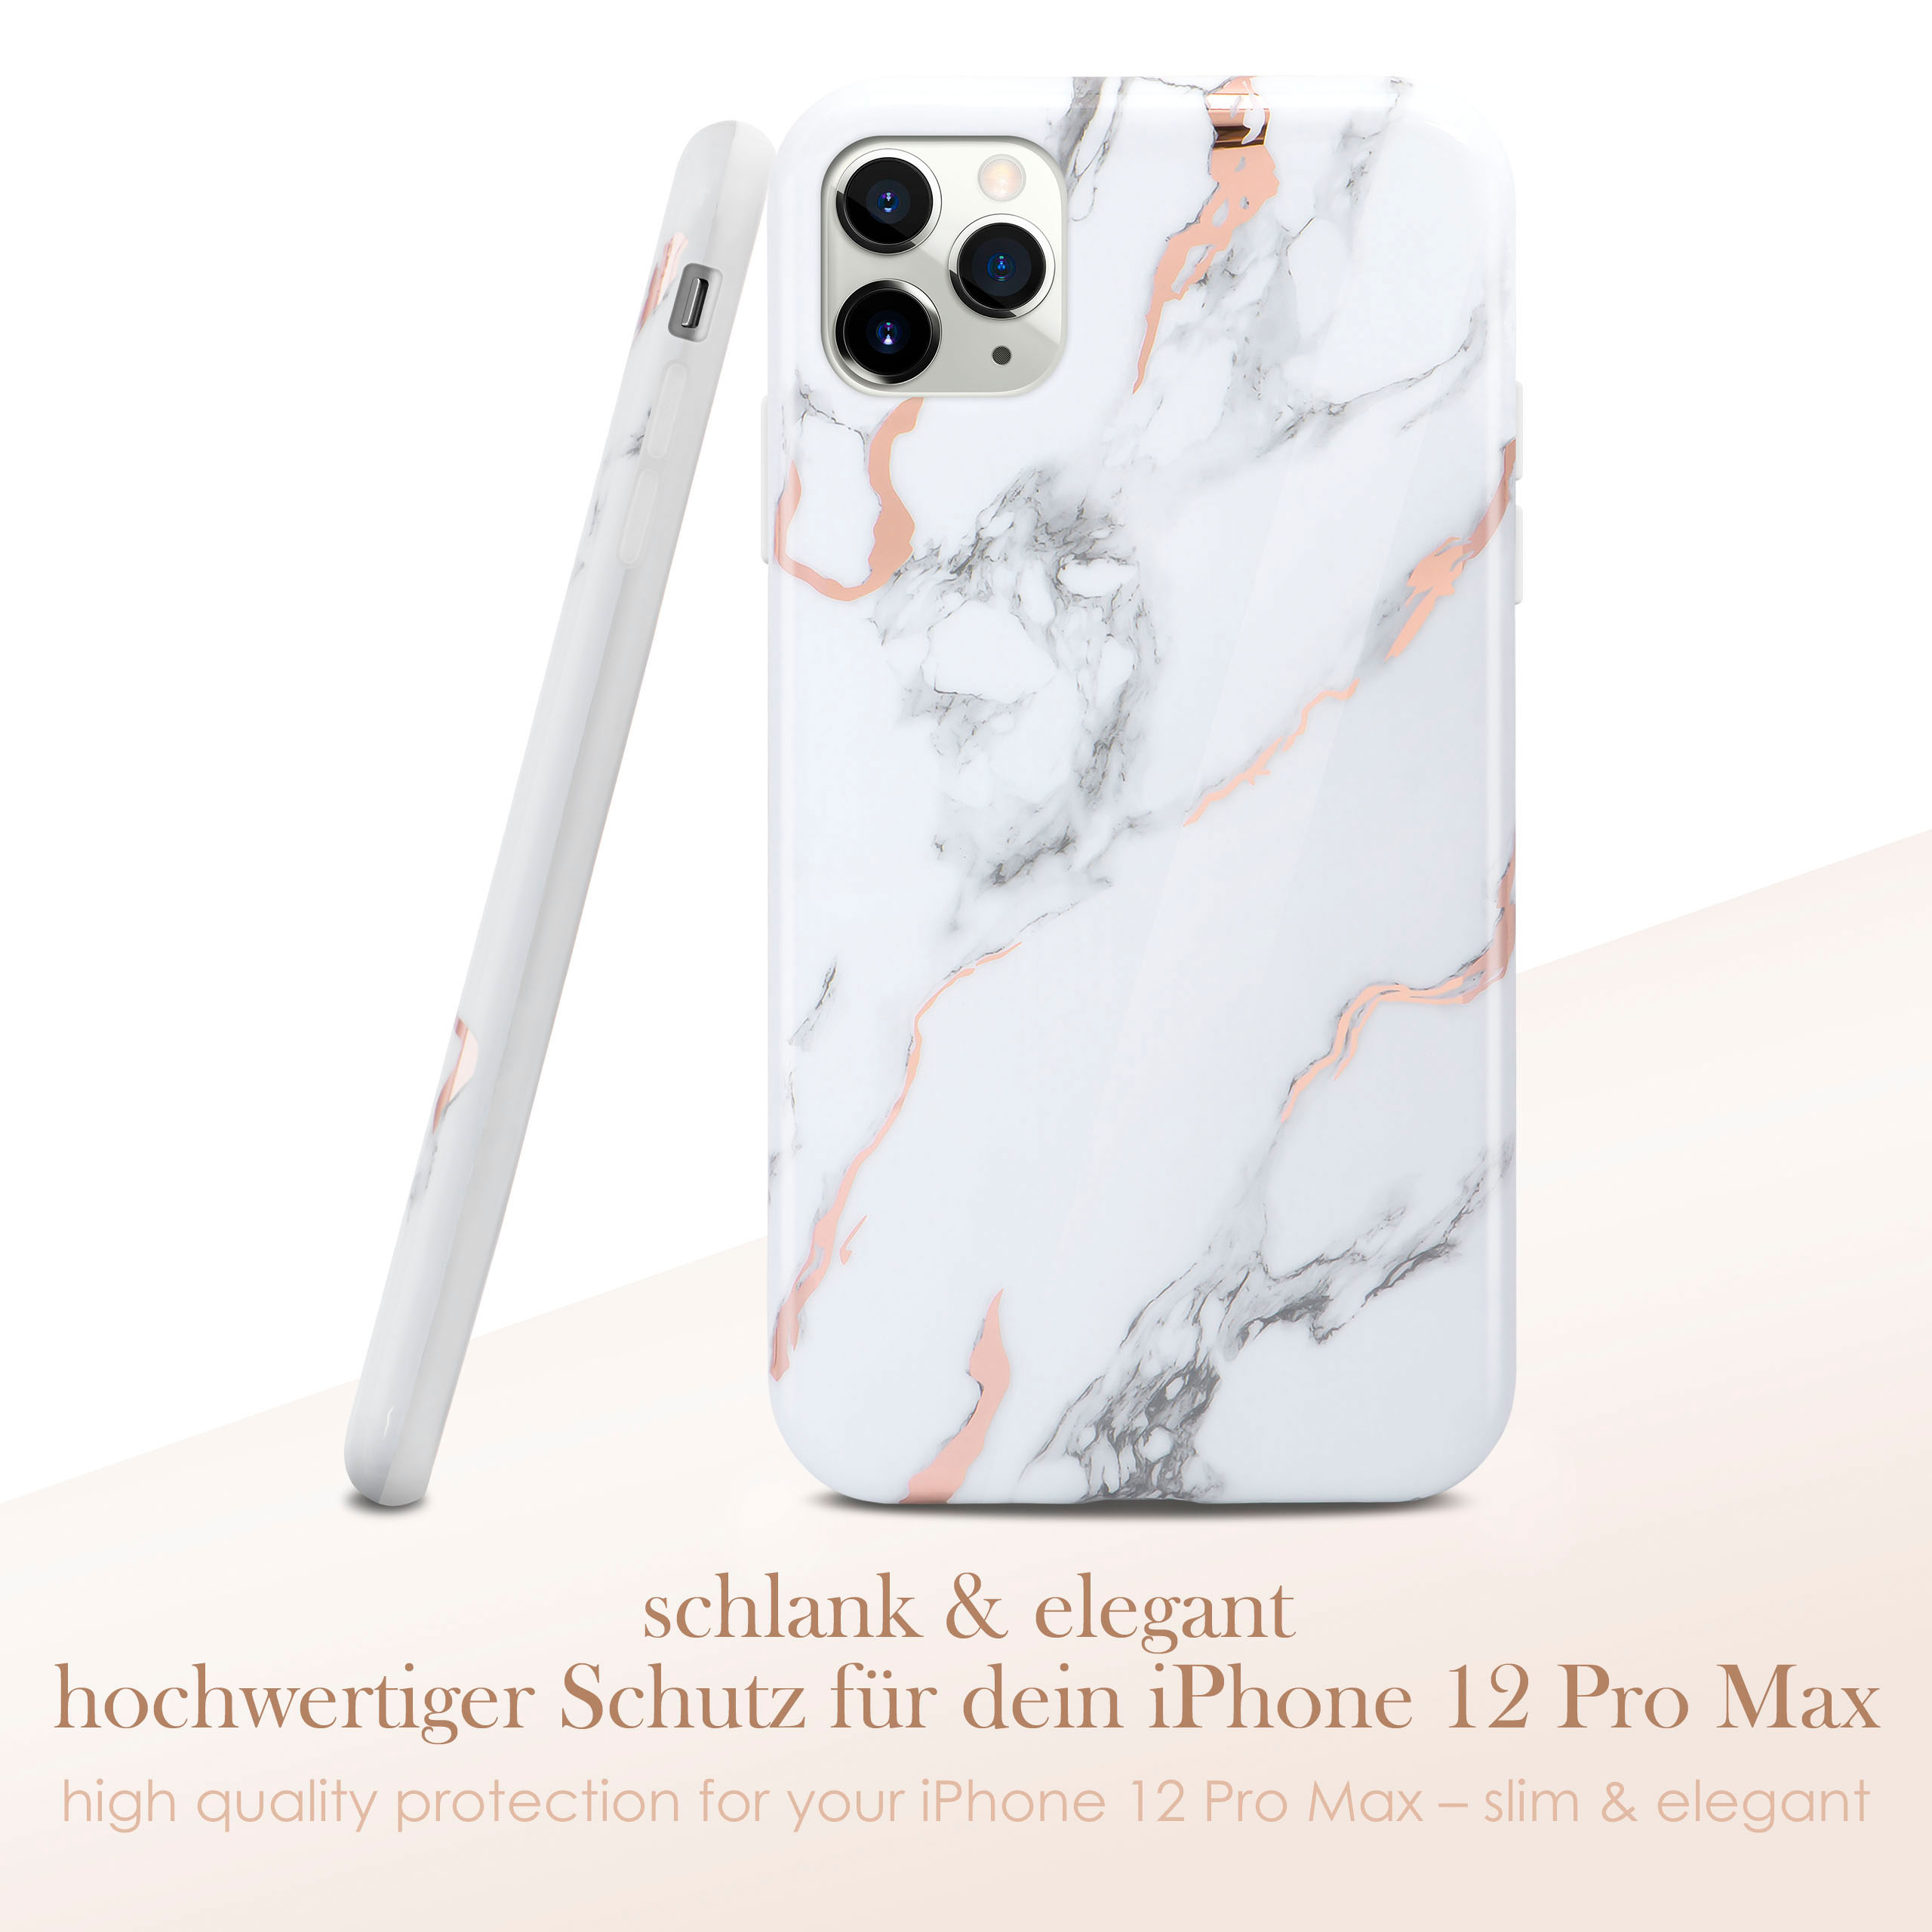 Pro Apple, 12 Backcover, Dedication ONEFLOW Max, iPhone Sense Case,